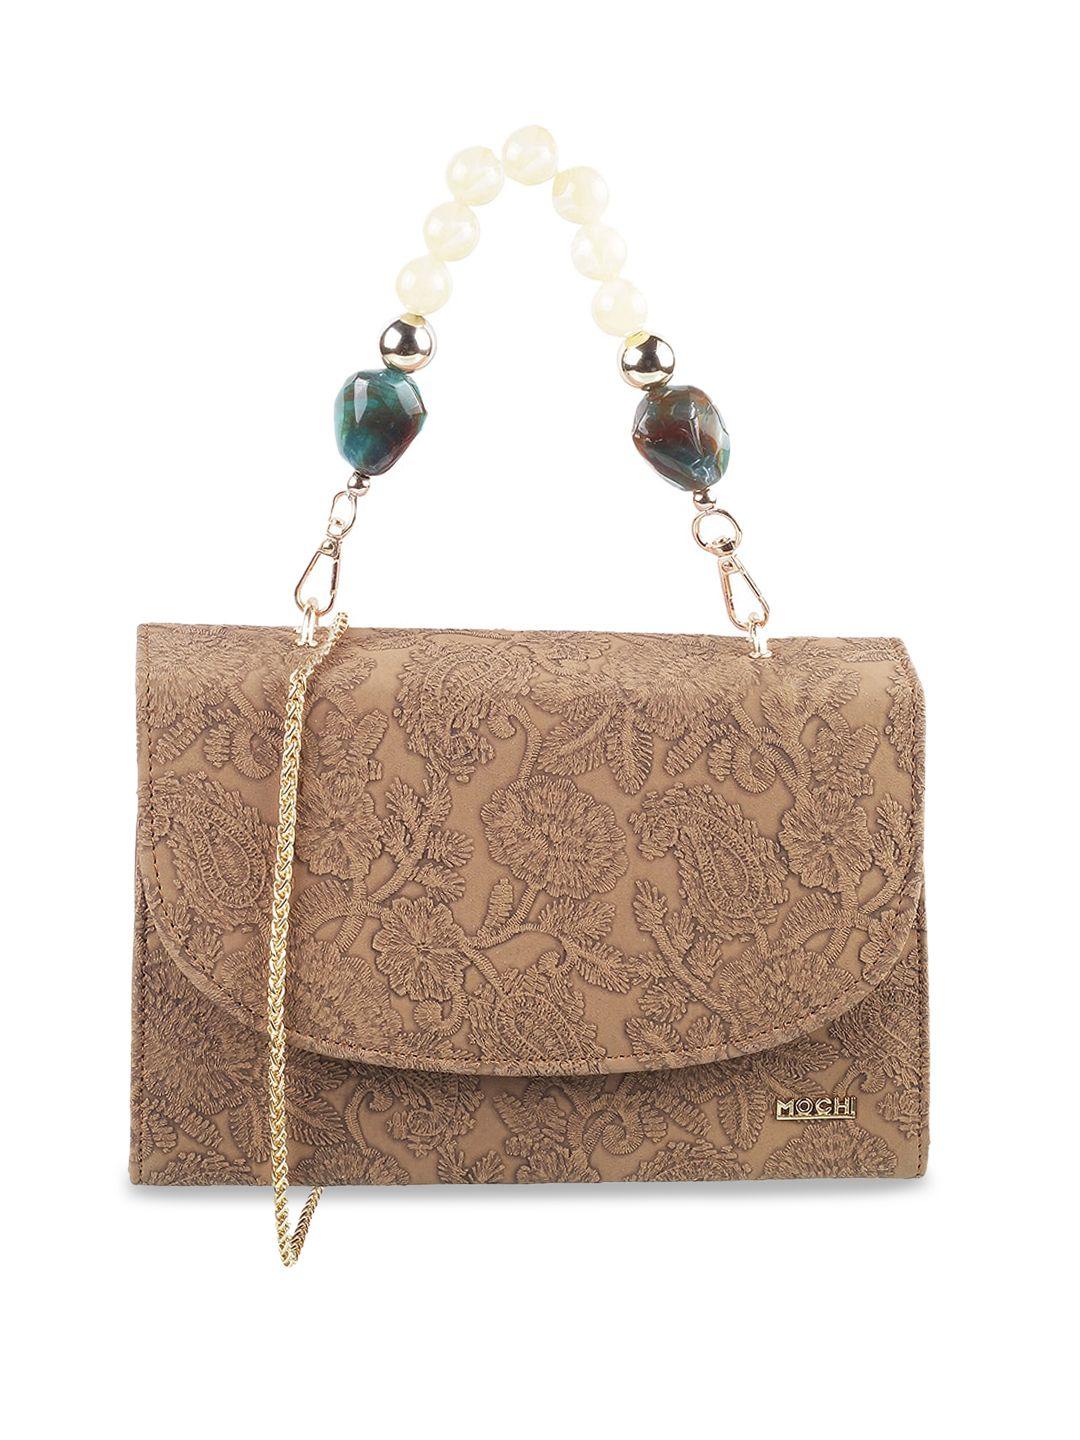 mochi printed purse clutch